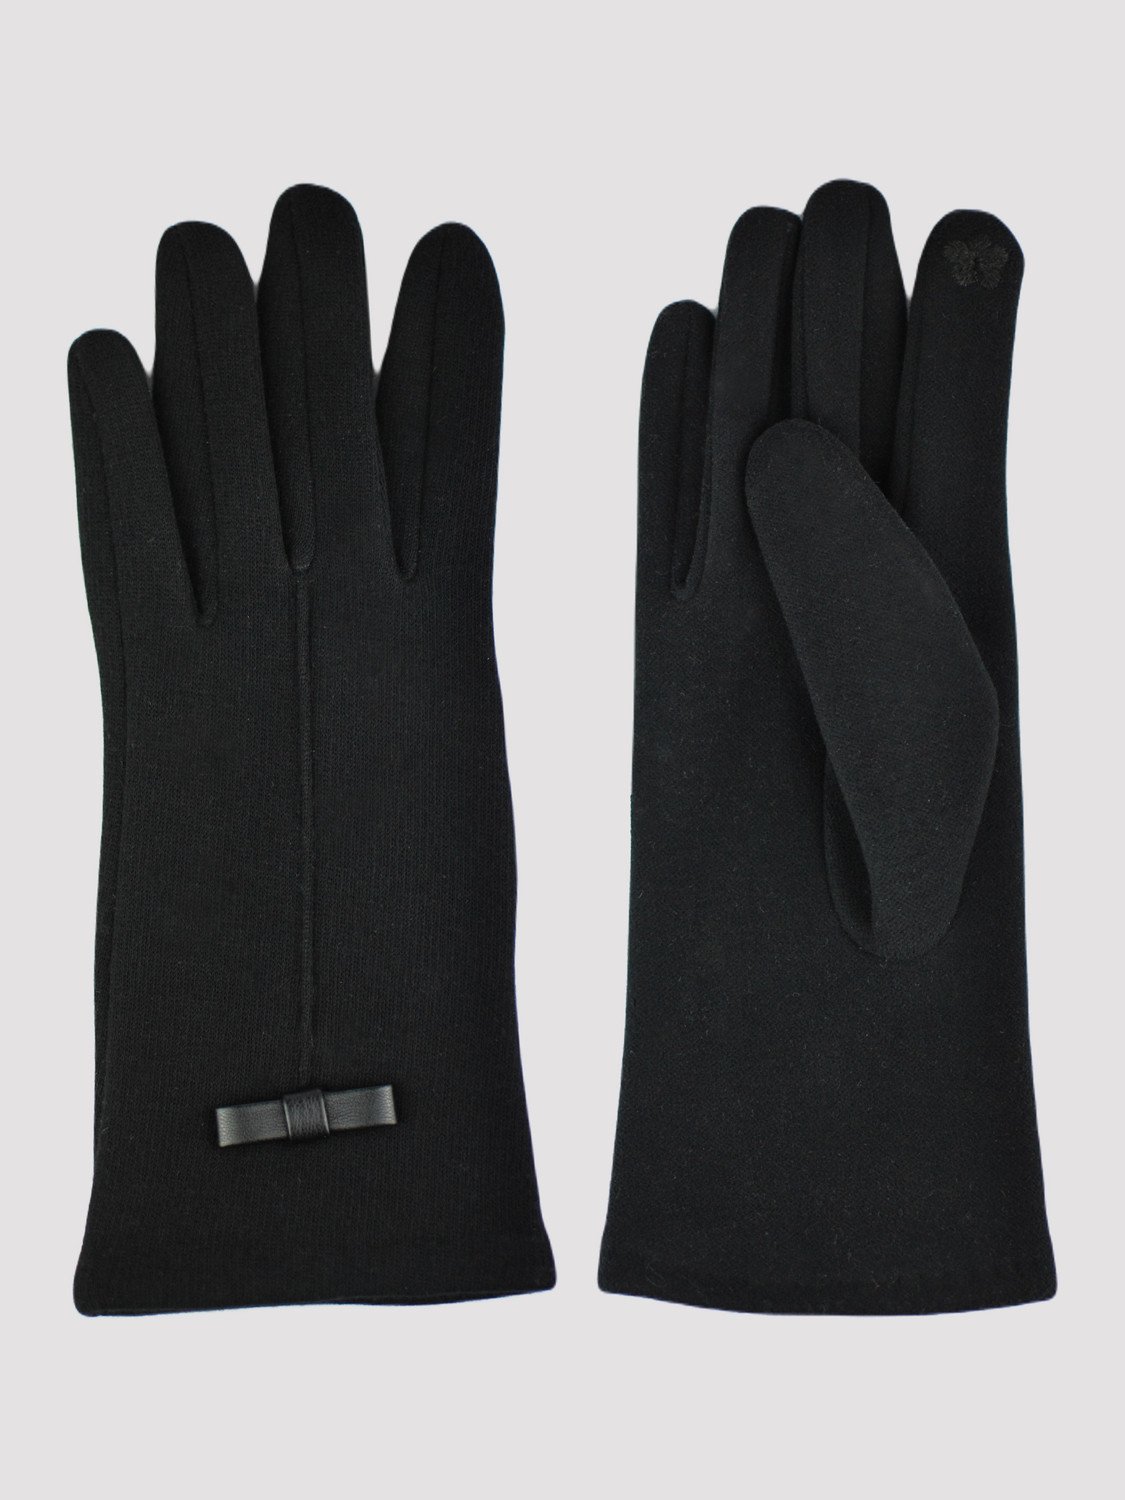 NOVITI Woman's Gloves RW009-W-01